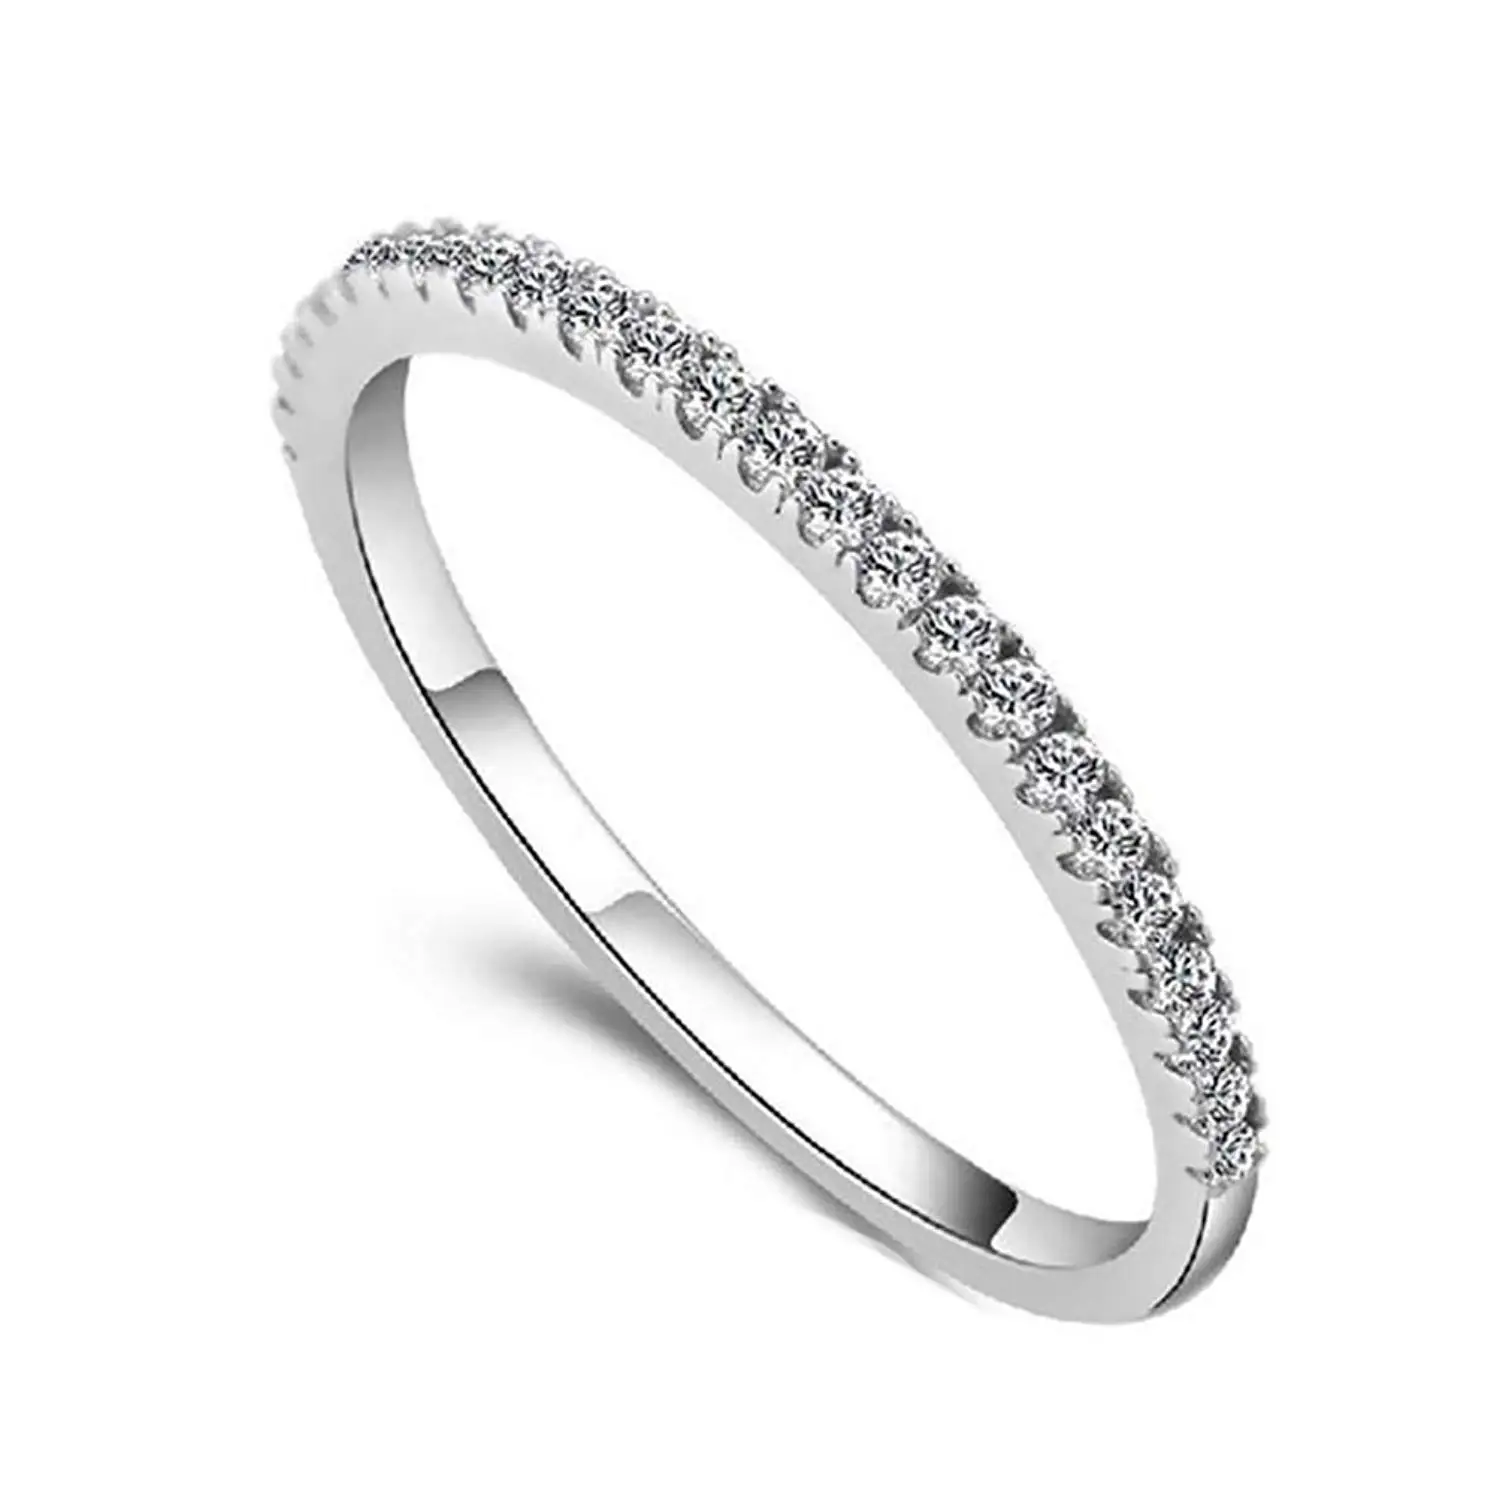 Cheap Beautiful Wedding Ring Designs Find Beautiful Wedding Ring